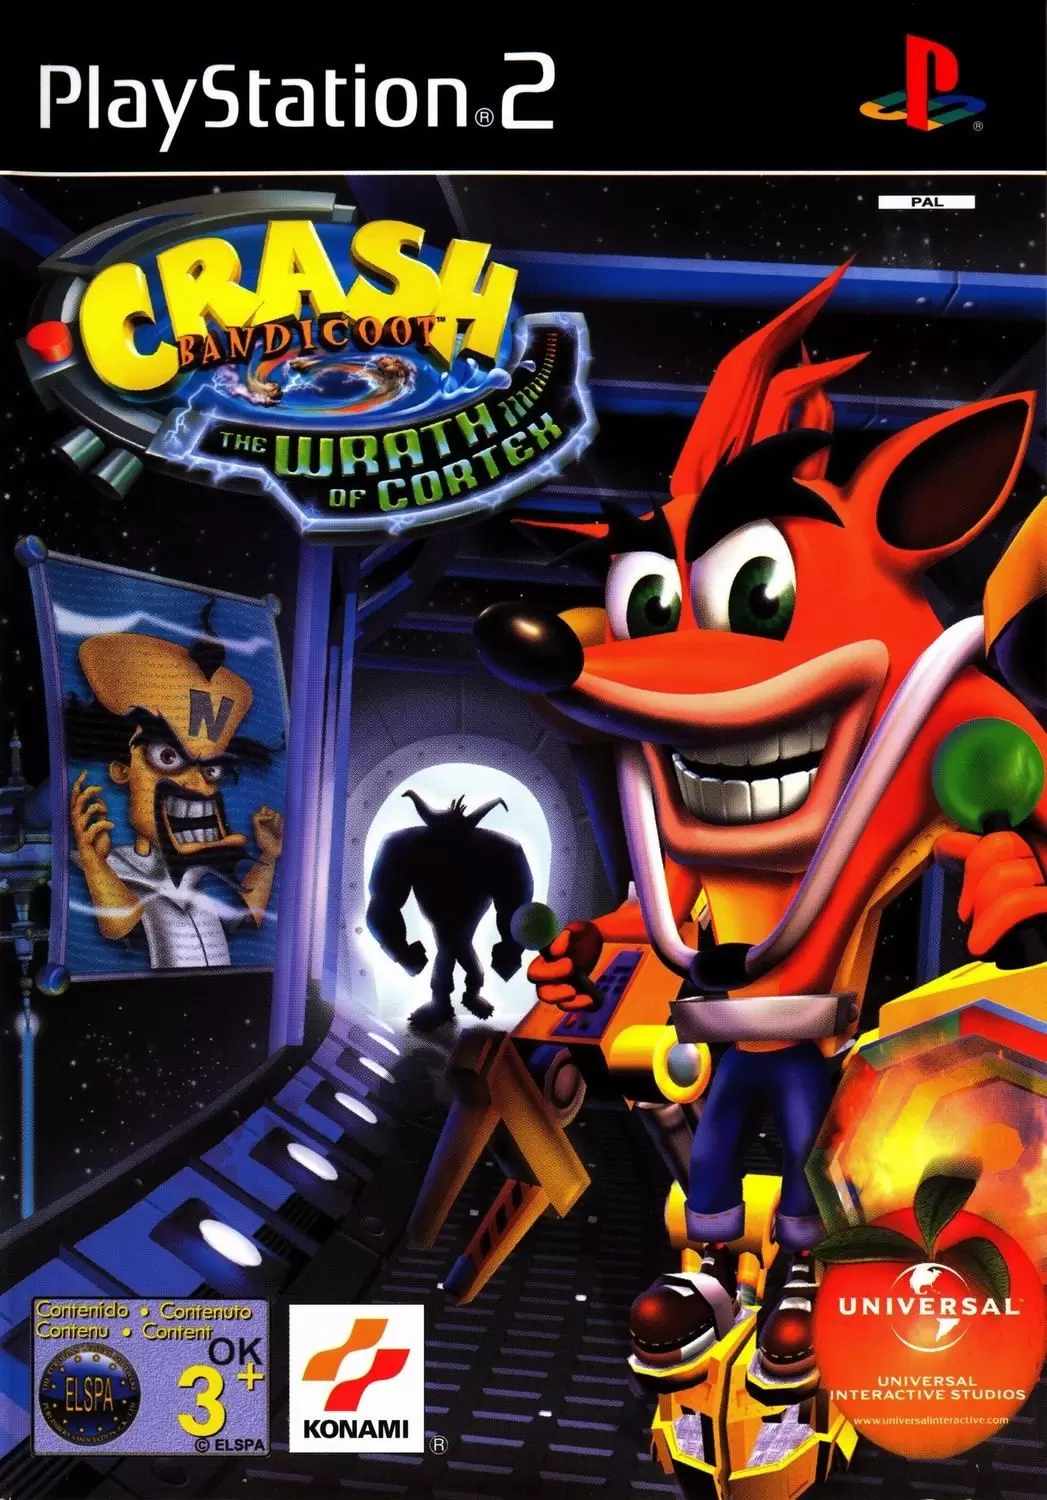 PS2 Games - Crash Bandicoot: The Wrath of Cortex